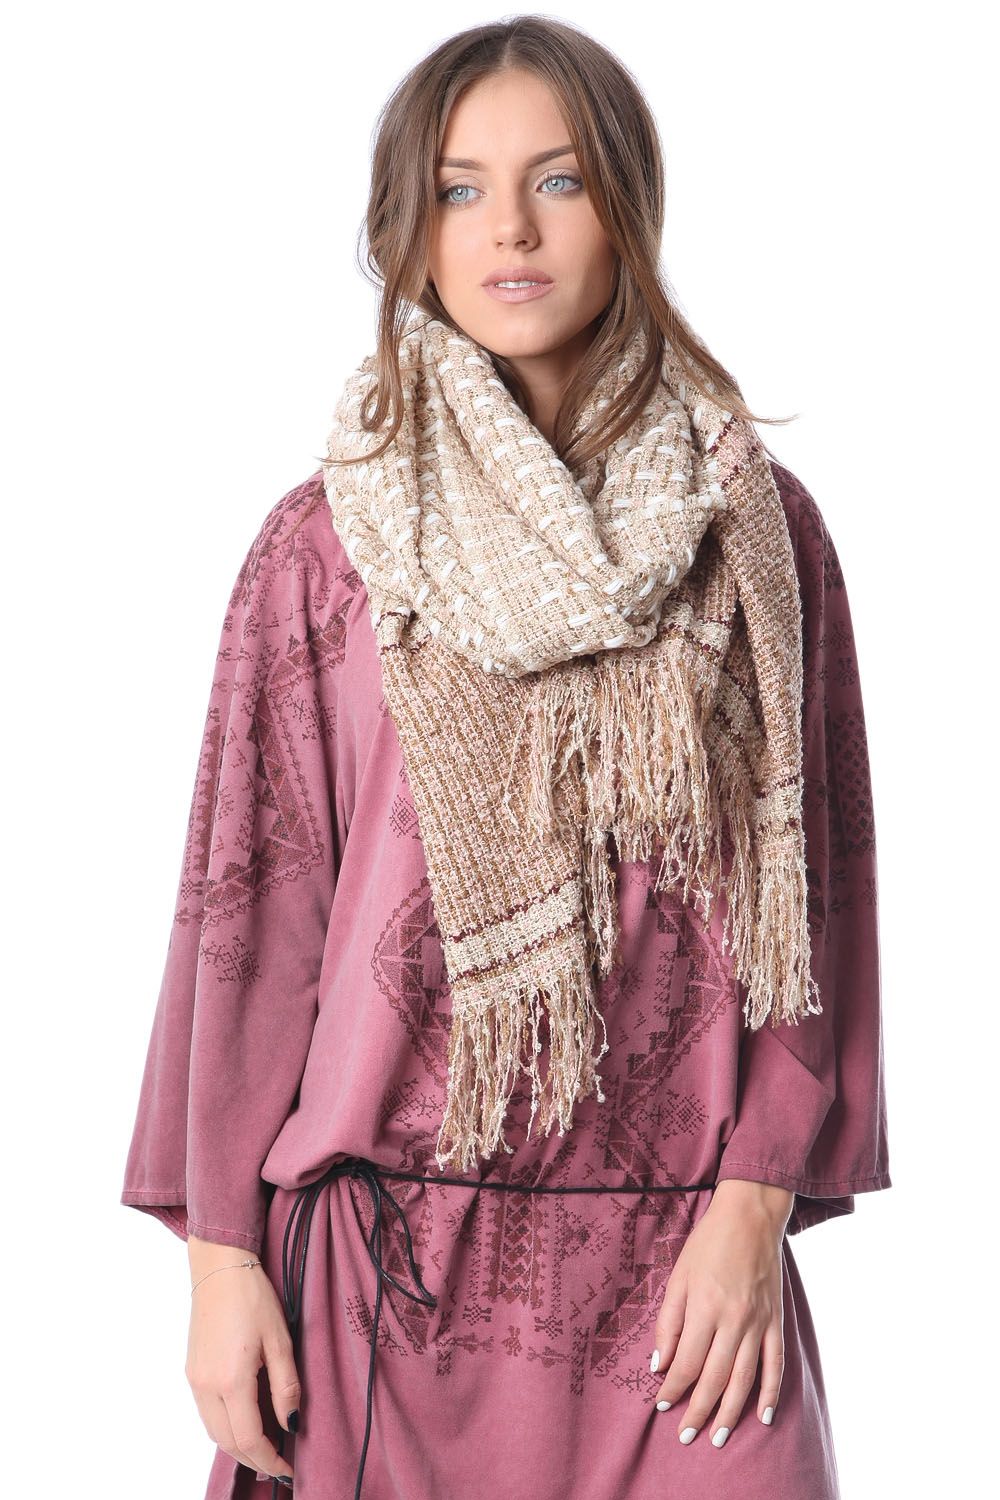 Q2 Pink knitt scarf with fleck